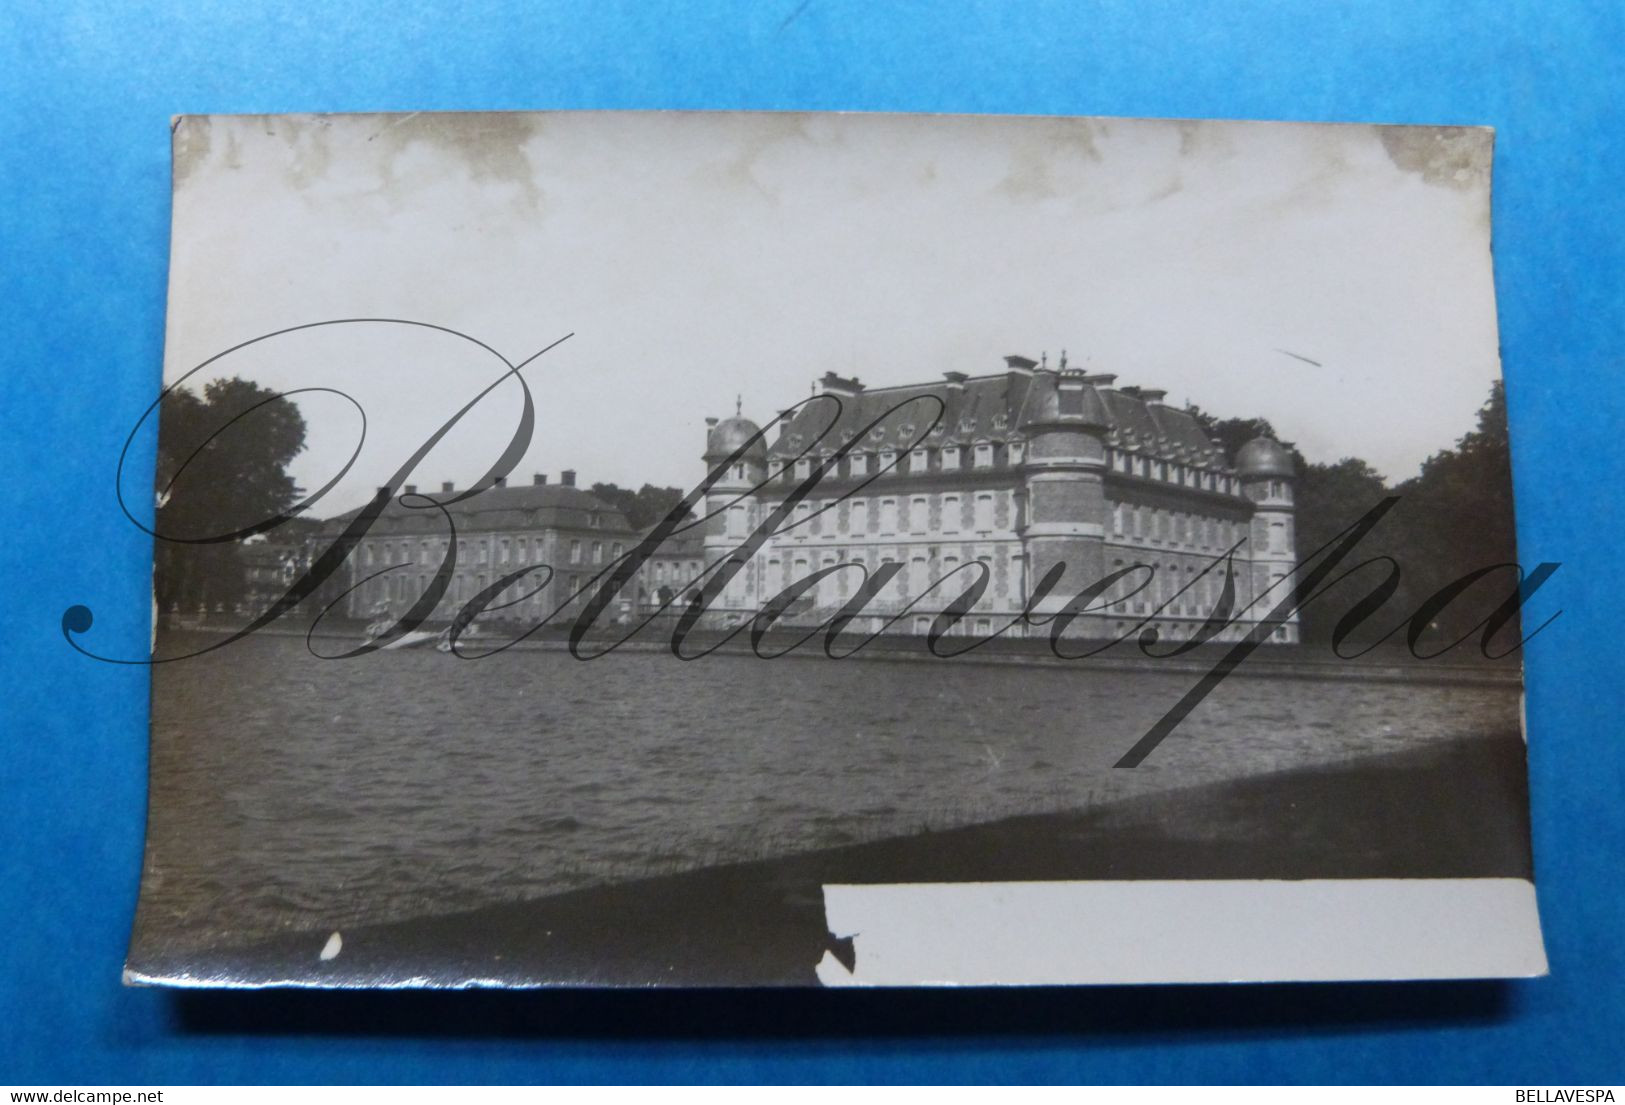 Beloeil delcourt  carte photo   precuseur ou epreuve   x 5 piece -cpa